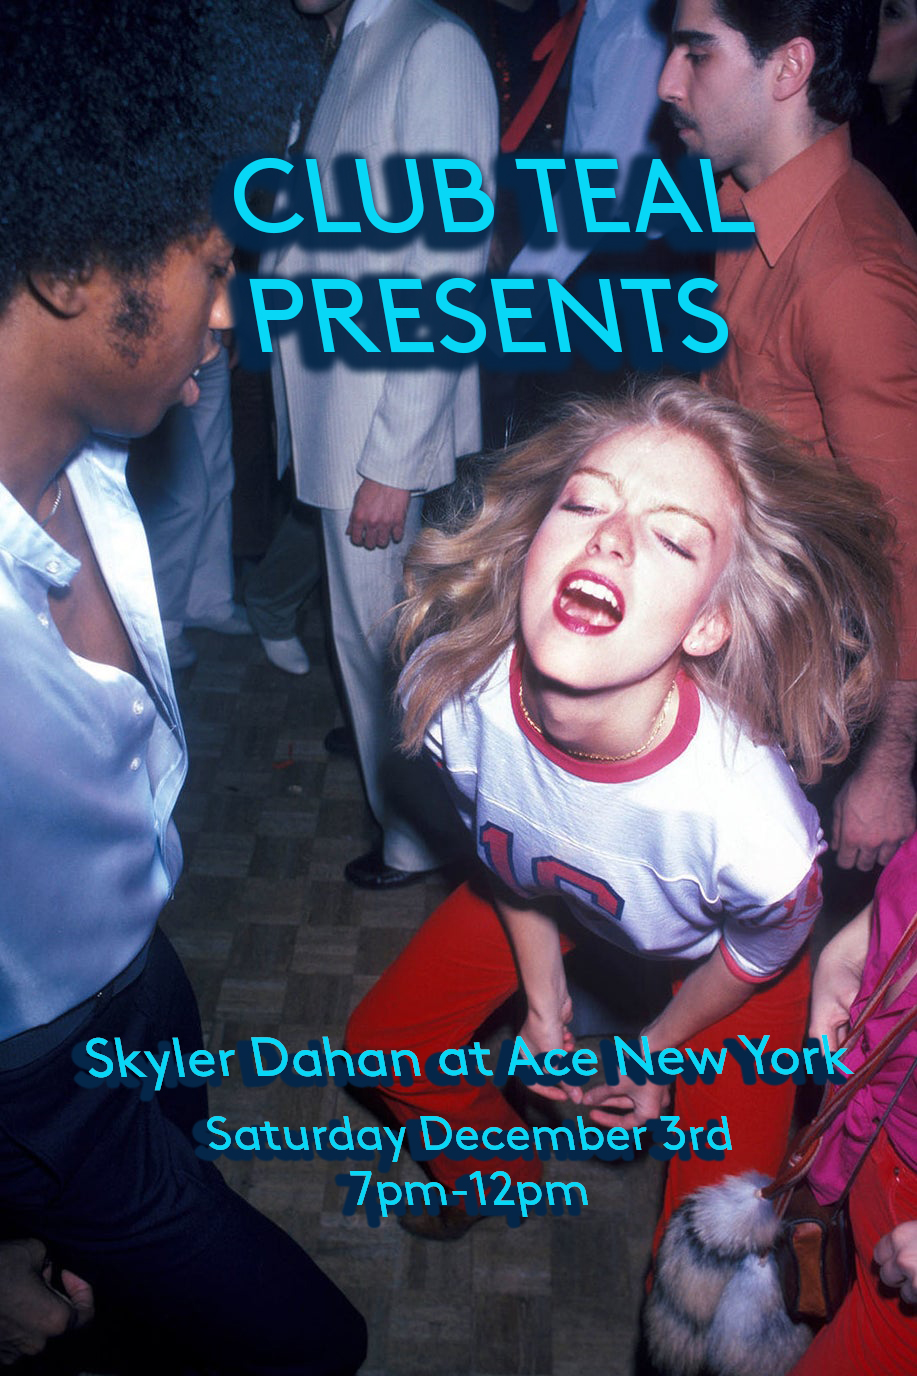 Club Teal Presents - a night with Skyler Dahan promo